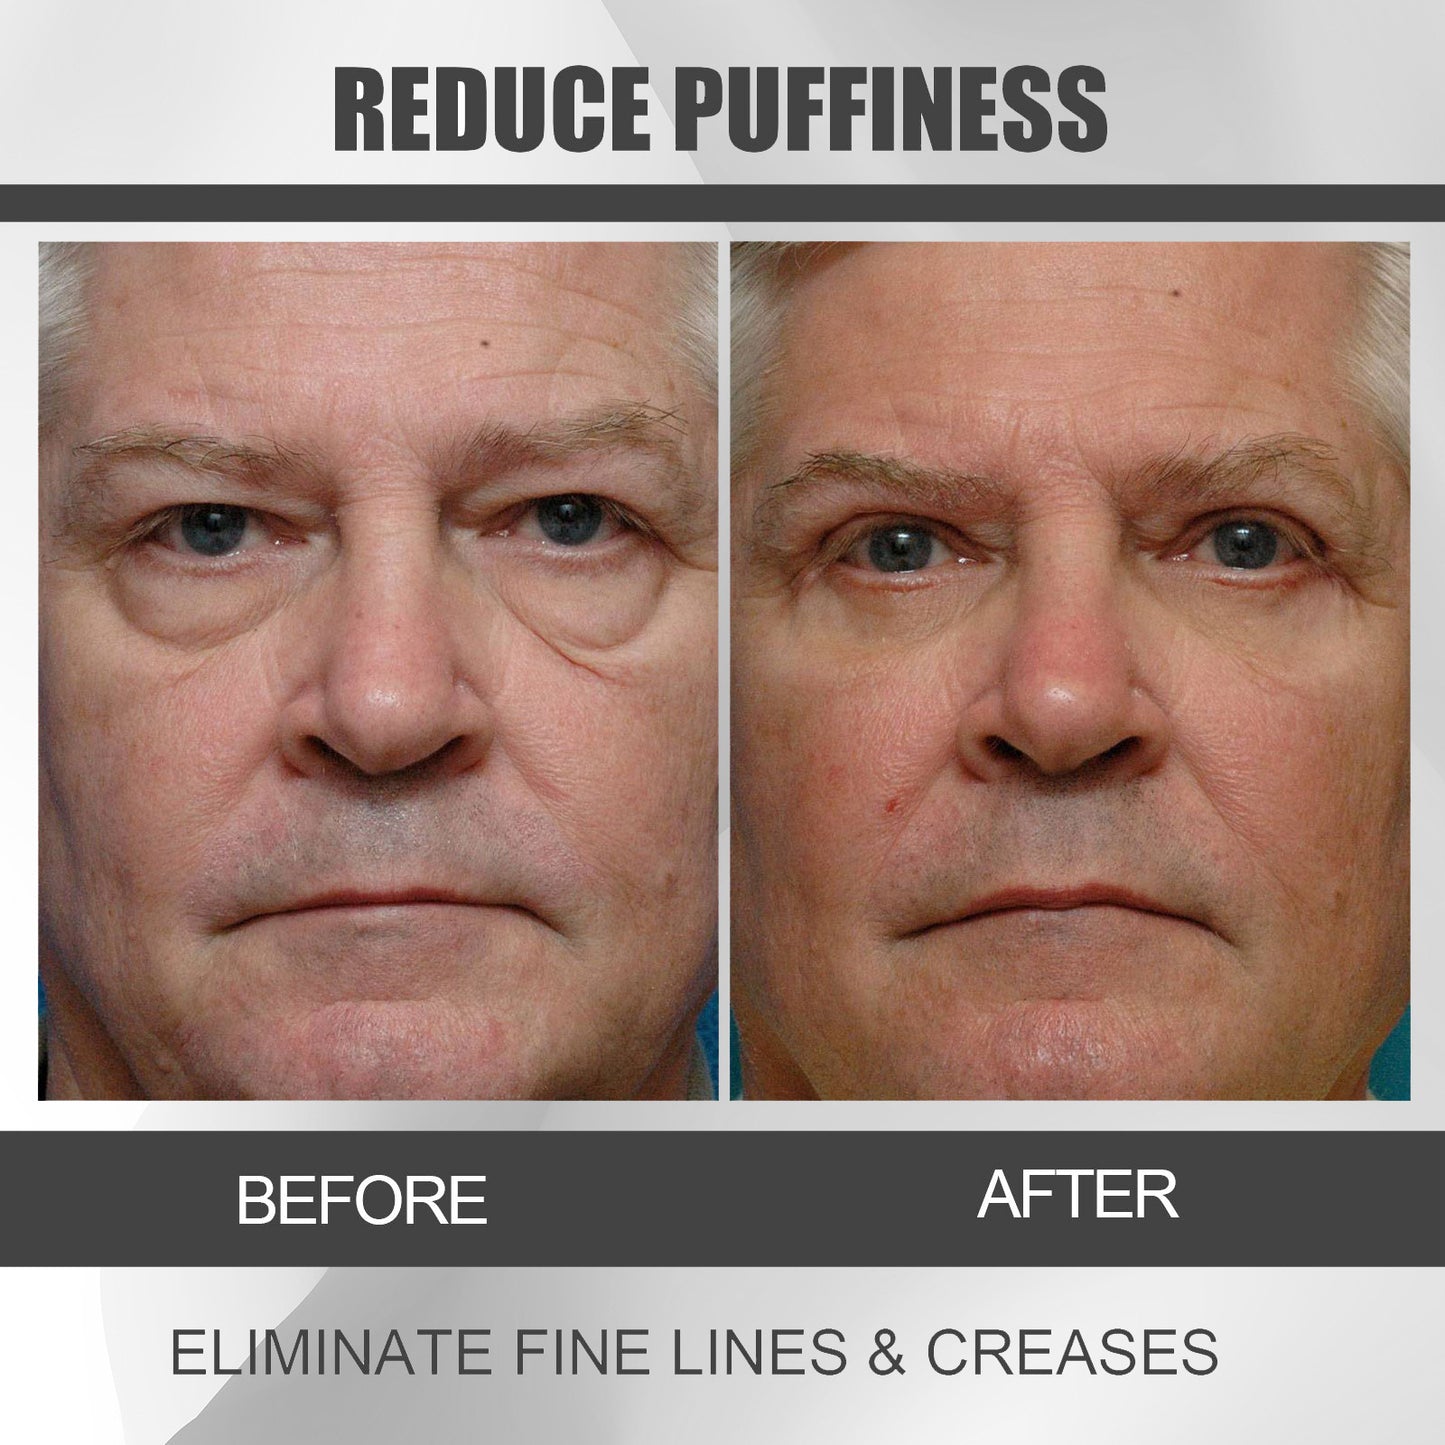 OUHOE Men's  Anti Wrinkle Eye Cream Hydrating Moisturizing Firming Fades Fine Lines Anti Aging Eye Cream(15ml)